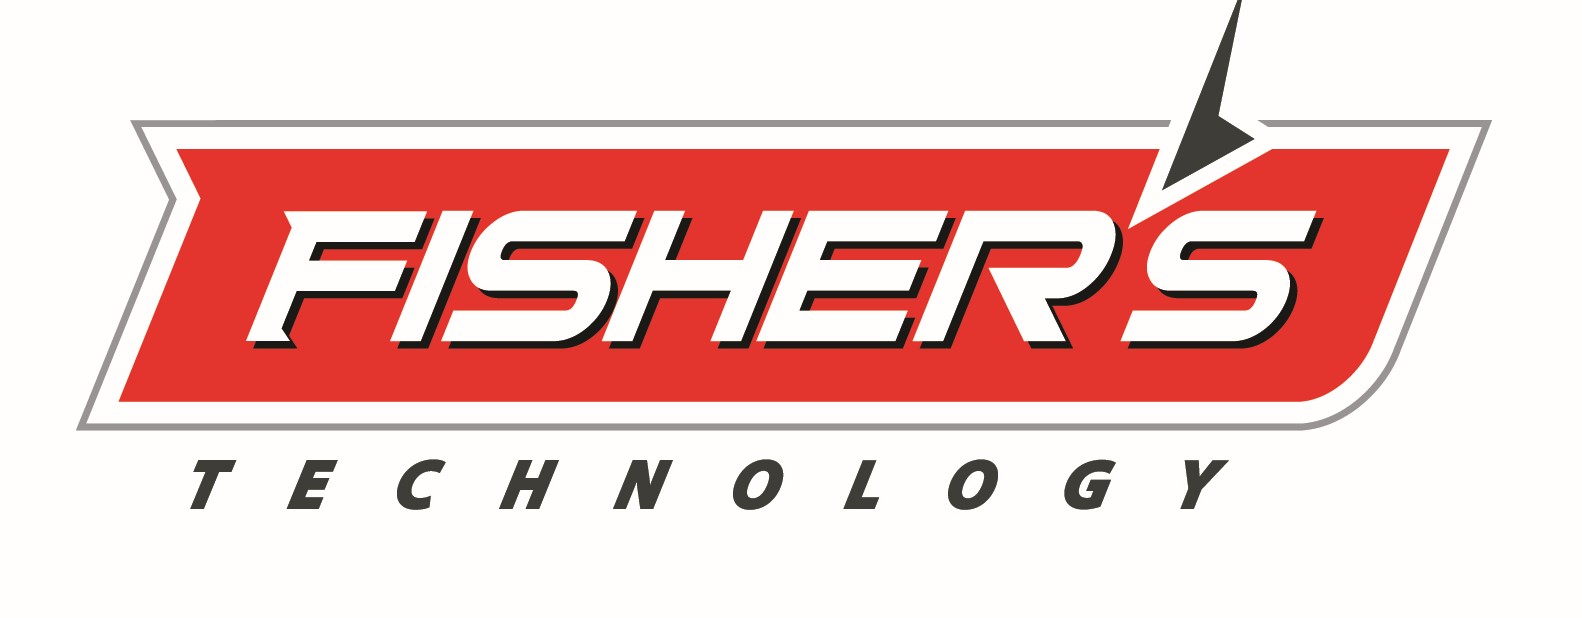 Fisher's Technology logo